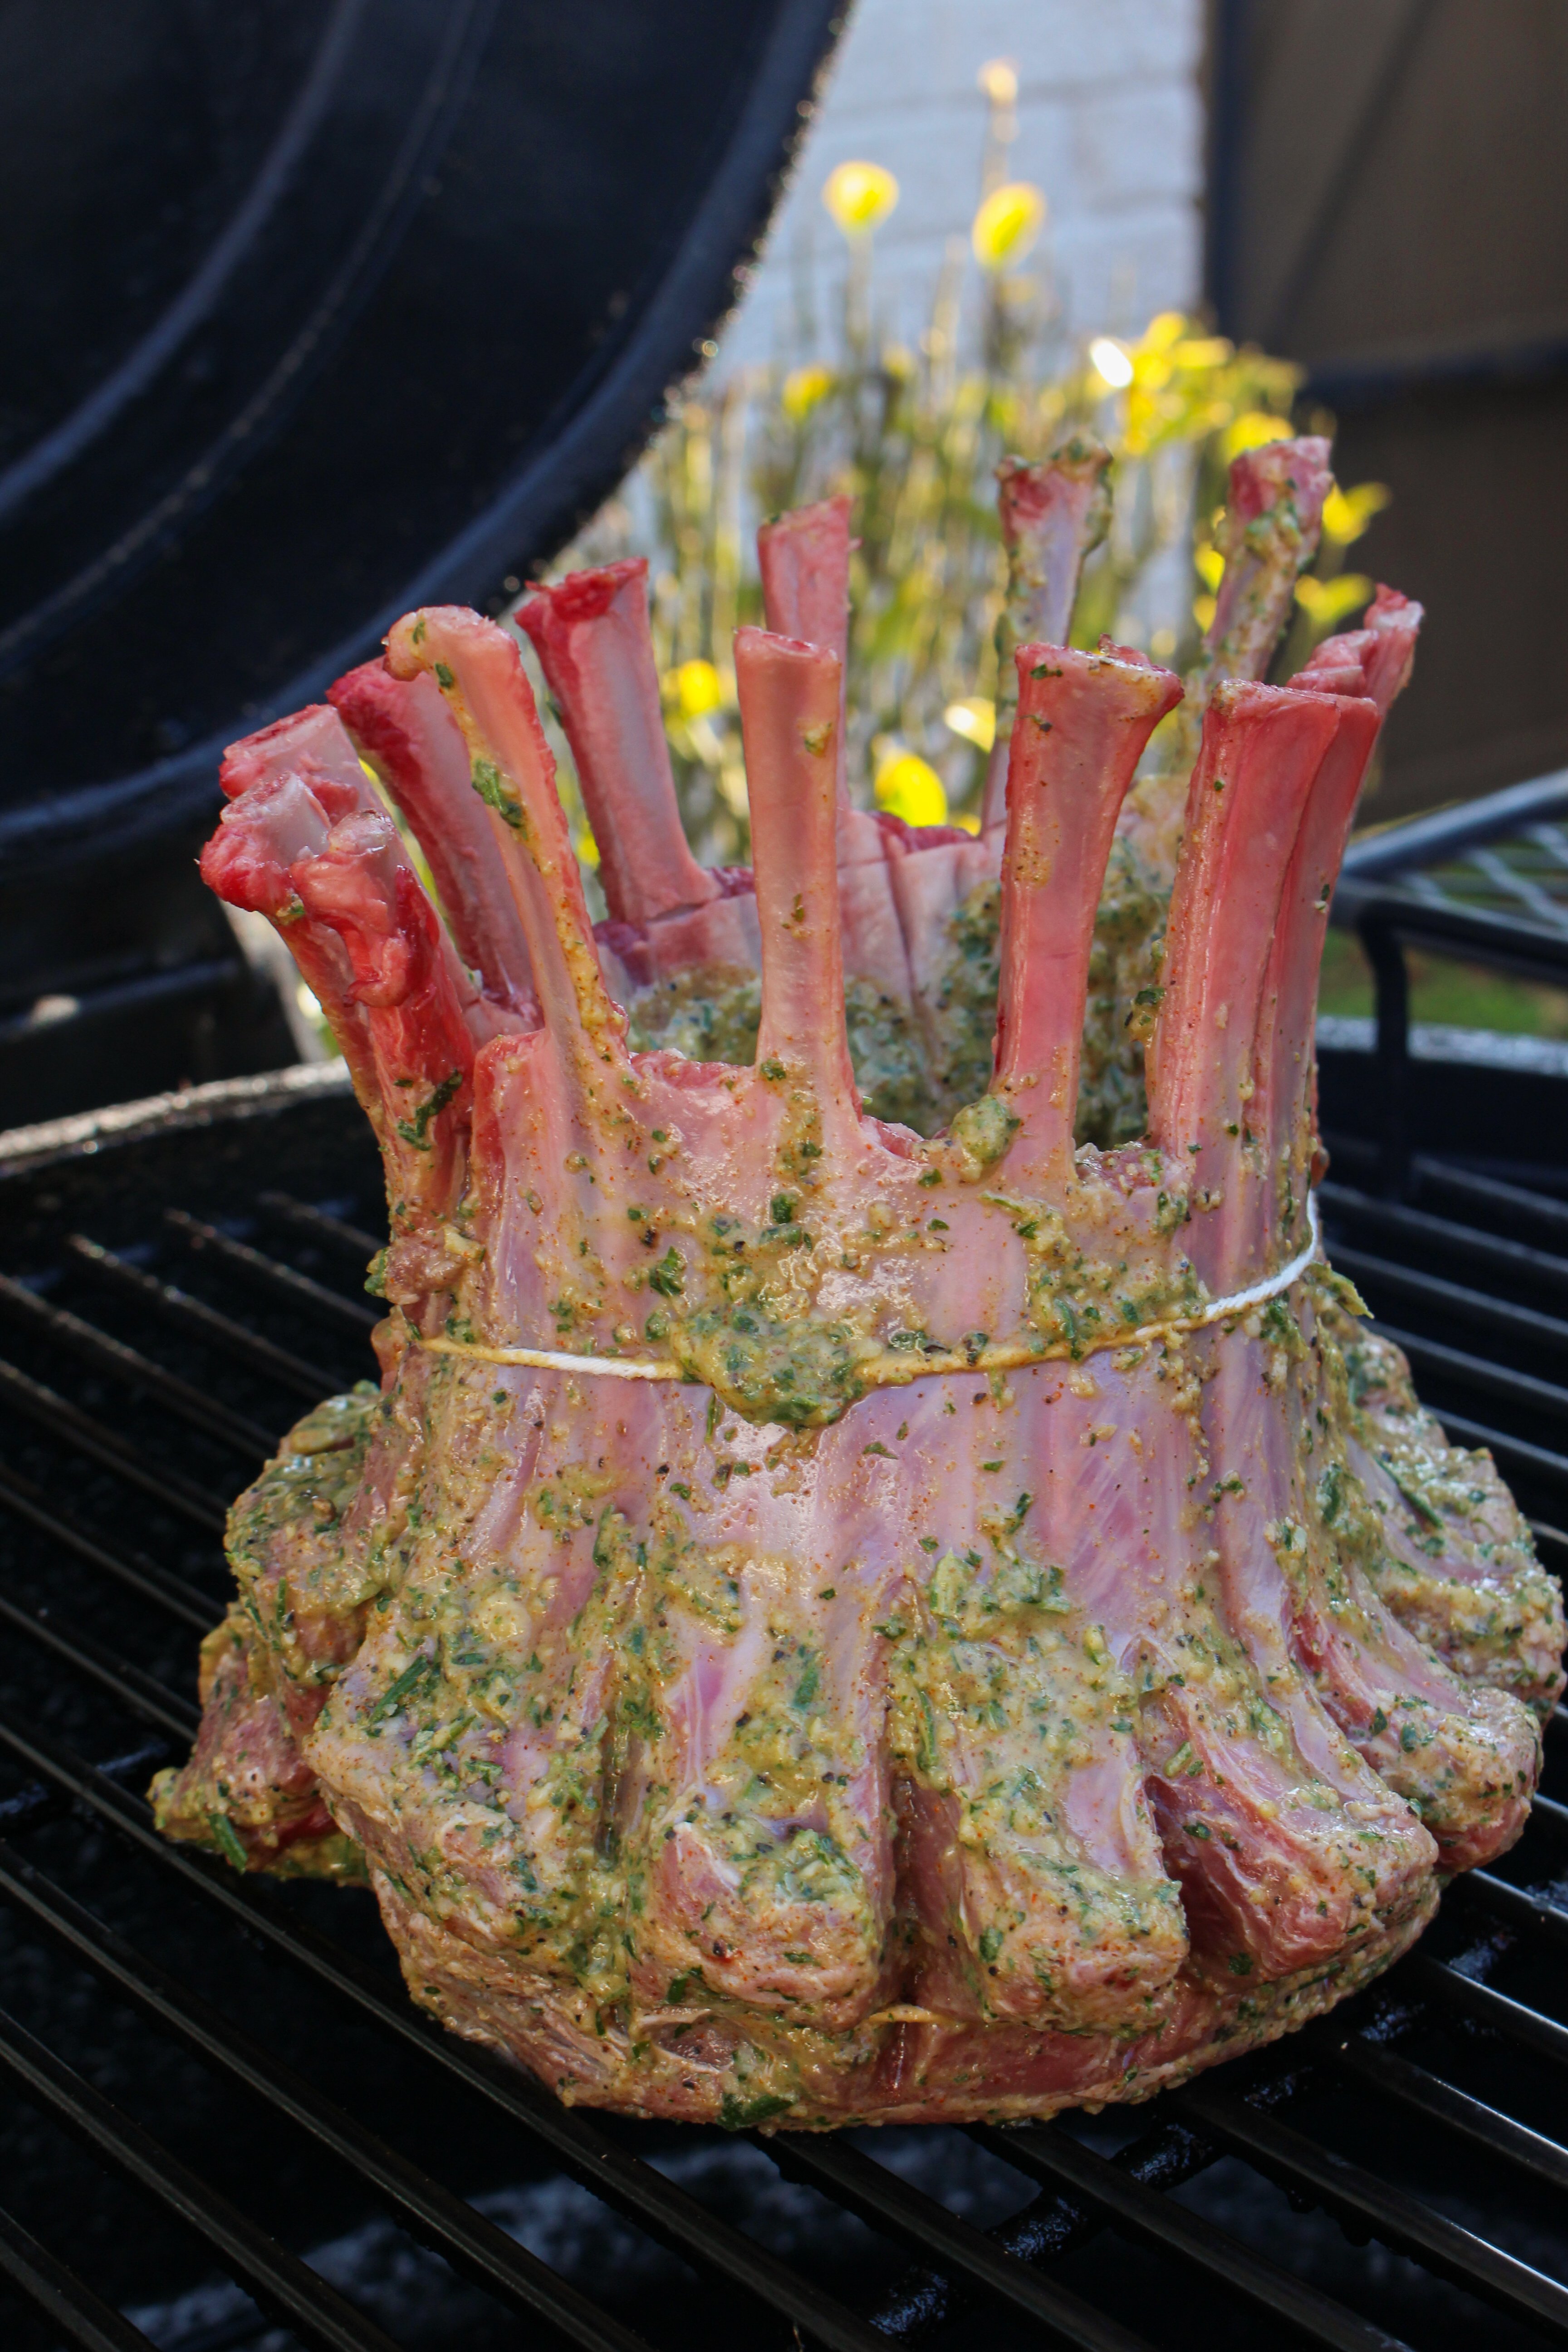 The raw lamb crown roast sitting seasoned on the smoker. 